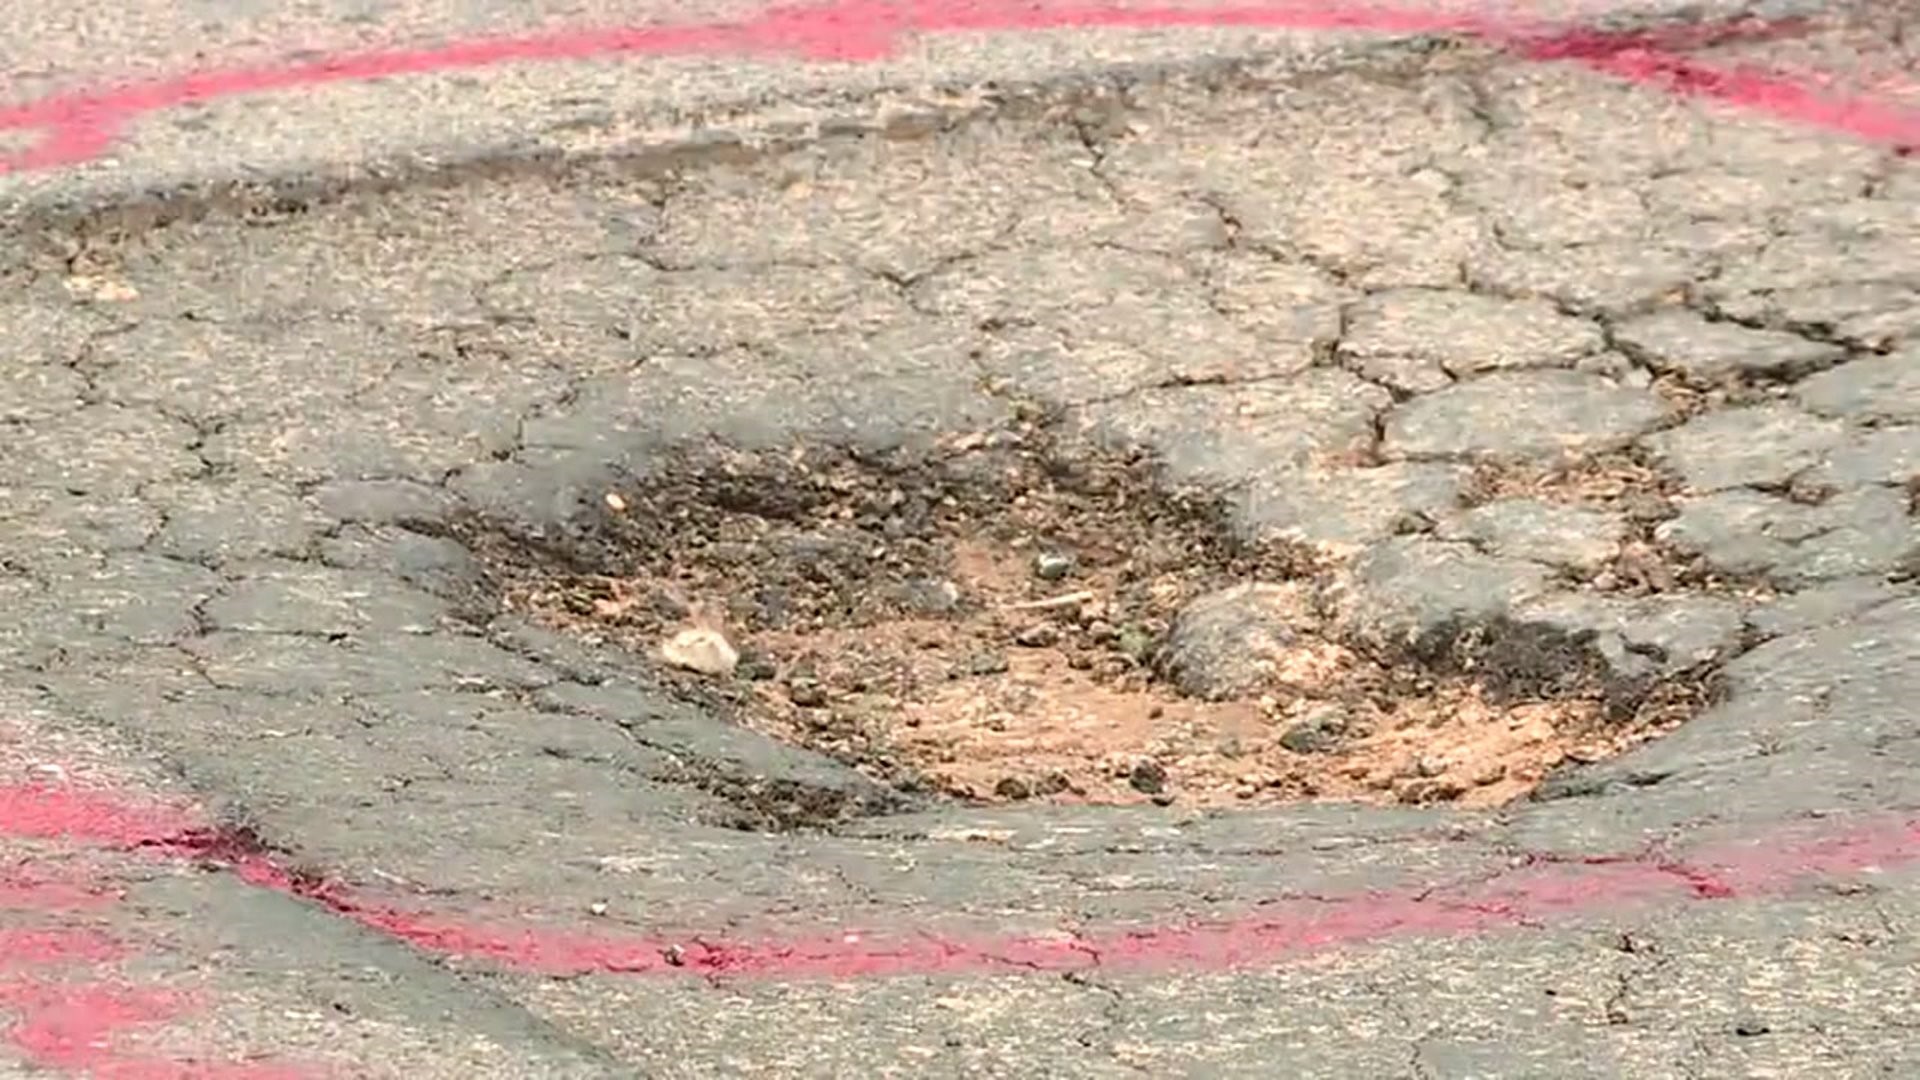 X-Rated Graffiti Forces Pothole Fixes